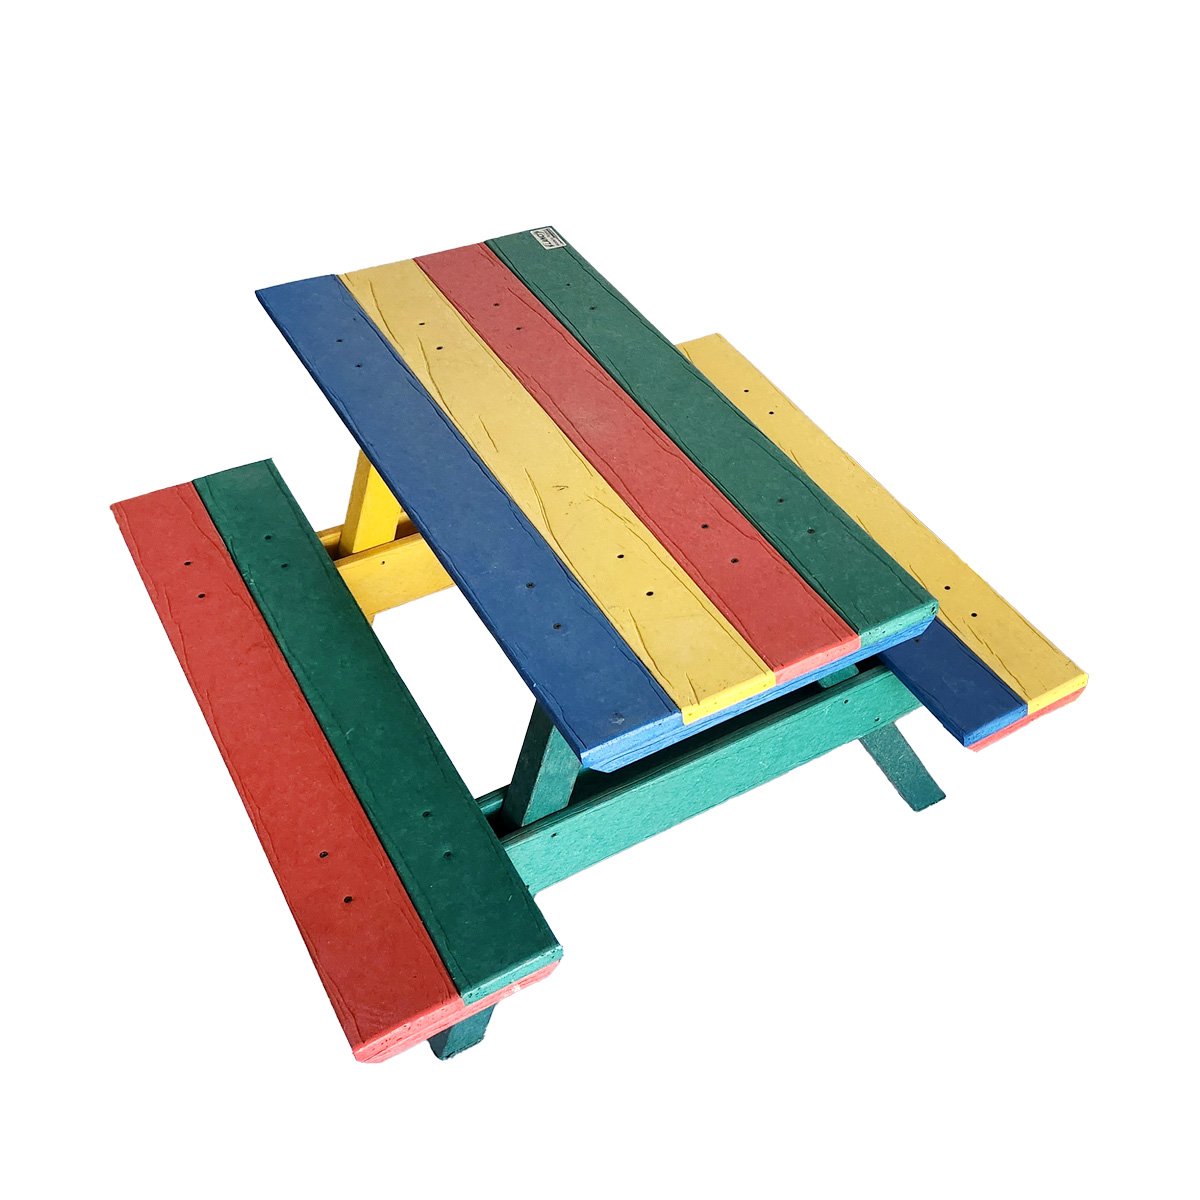 Mesa de Piquenique em Madeira Plástica Maciça Colorida 100% Reciclada 1m / Lc-06c Lanci - 3